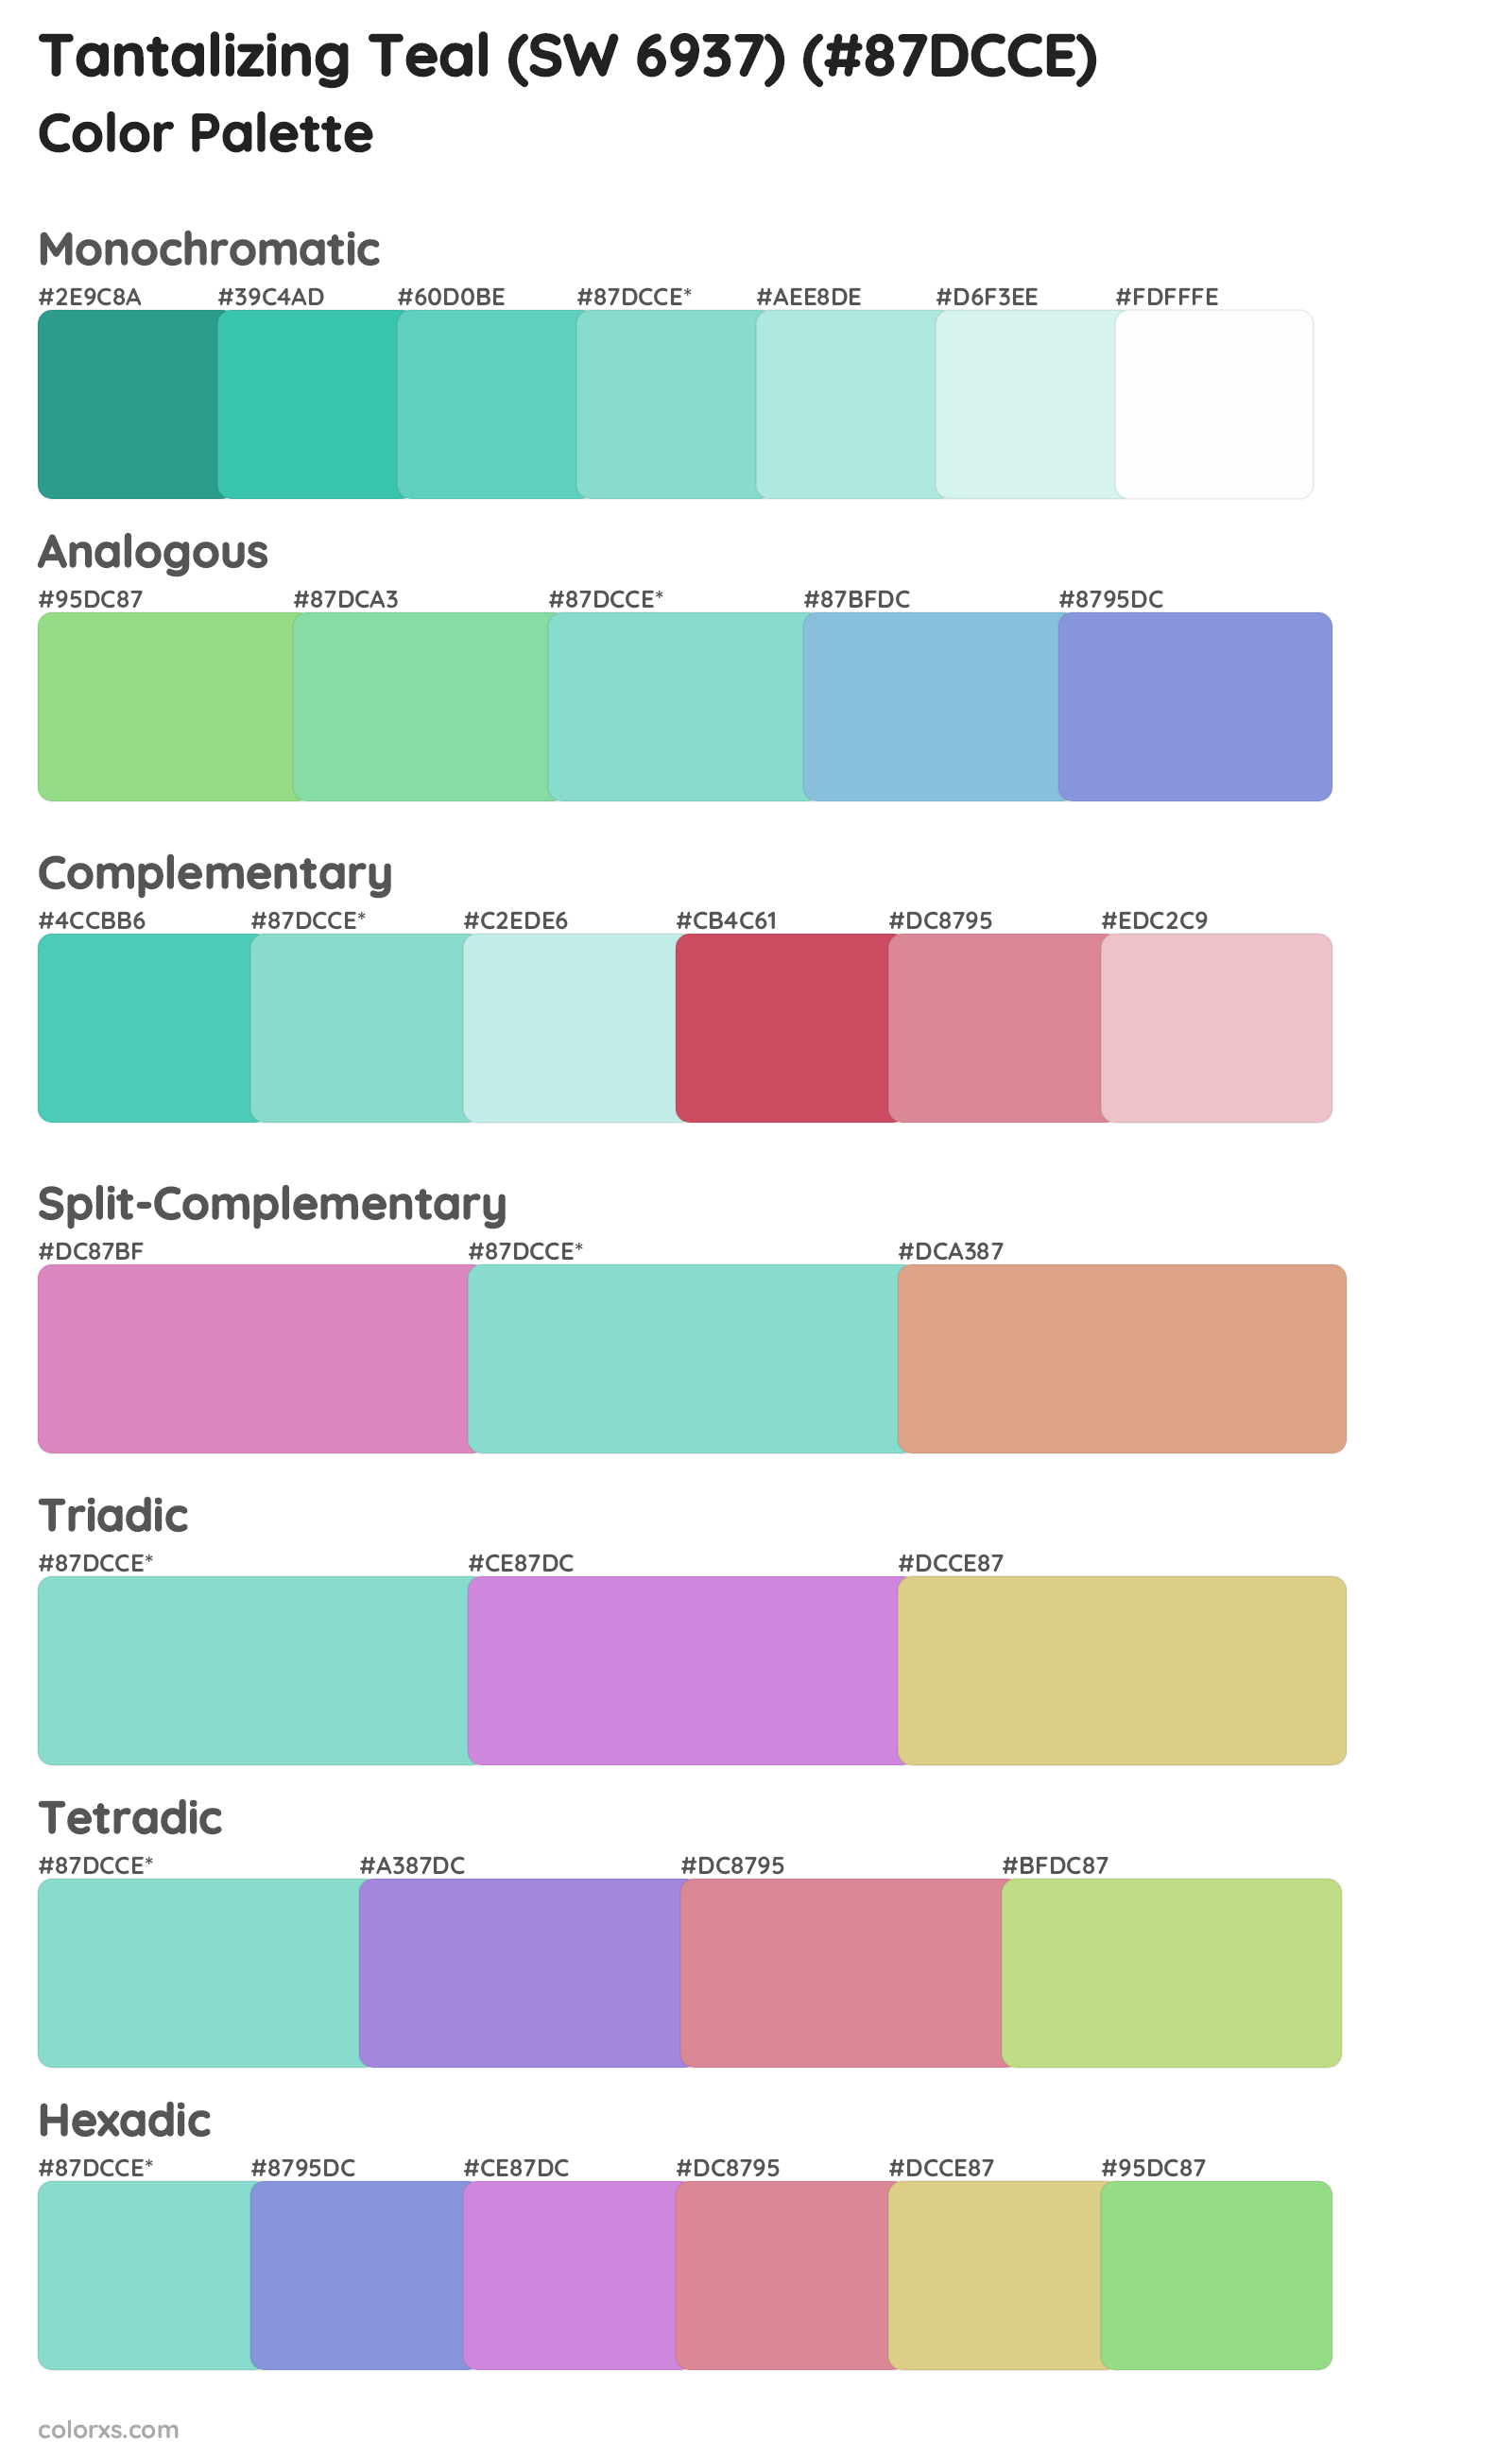 Tantalizing Teal (SW 6937) Color Scheme Palettes